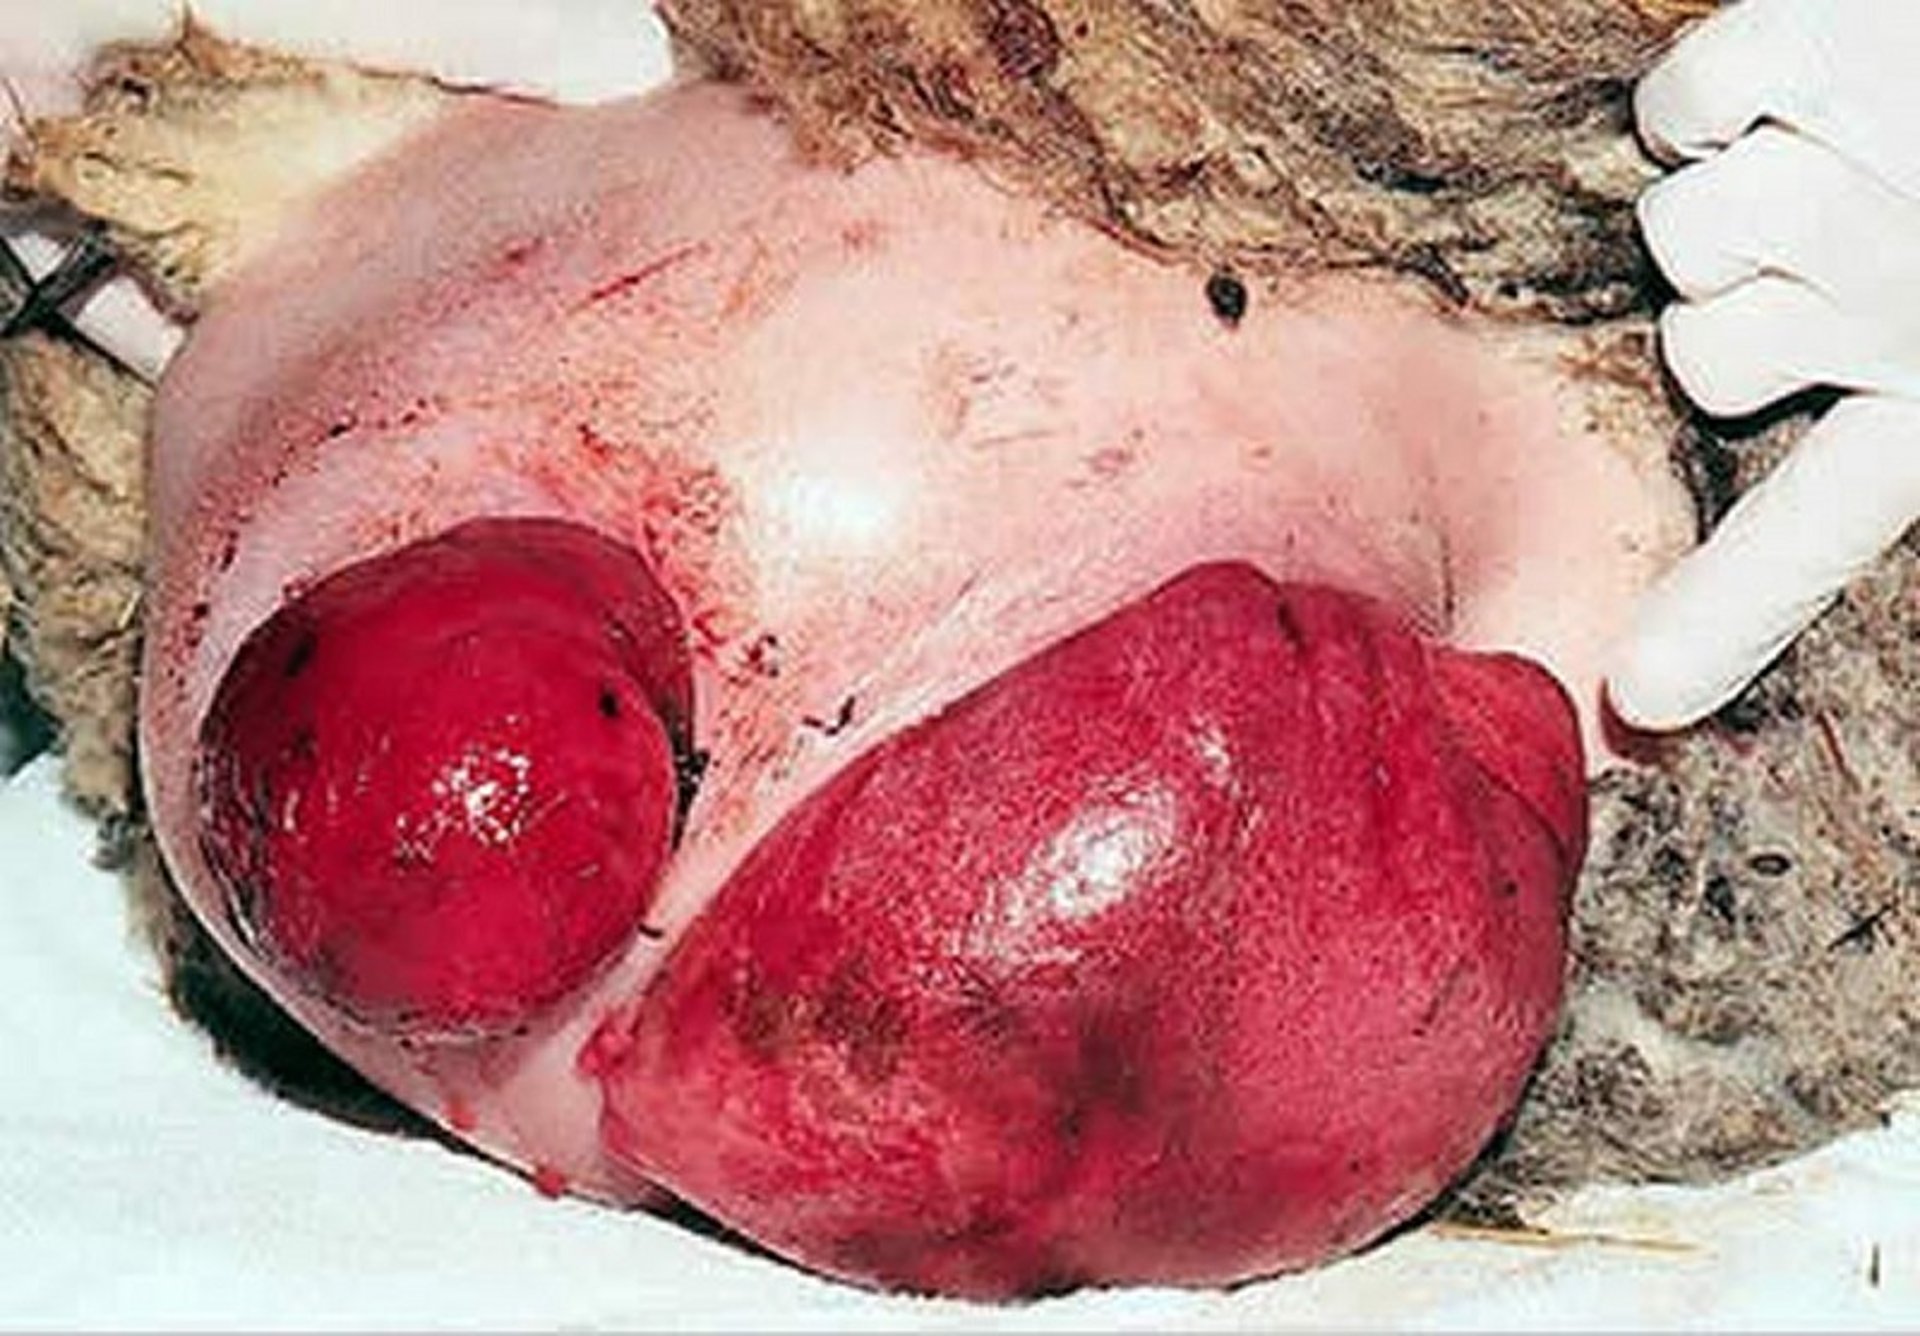 Prolapsed caudal vaginal mucosa, ewe